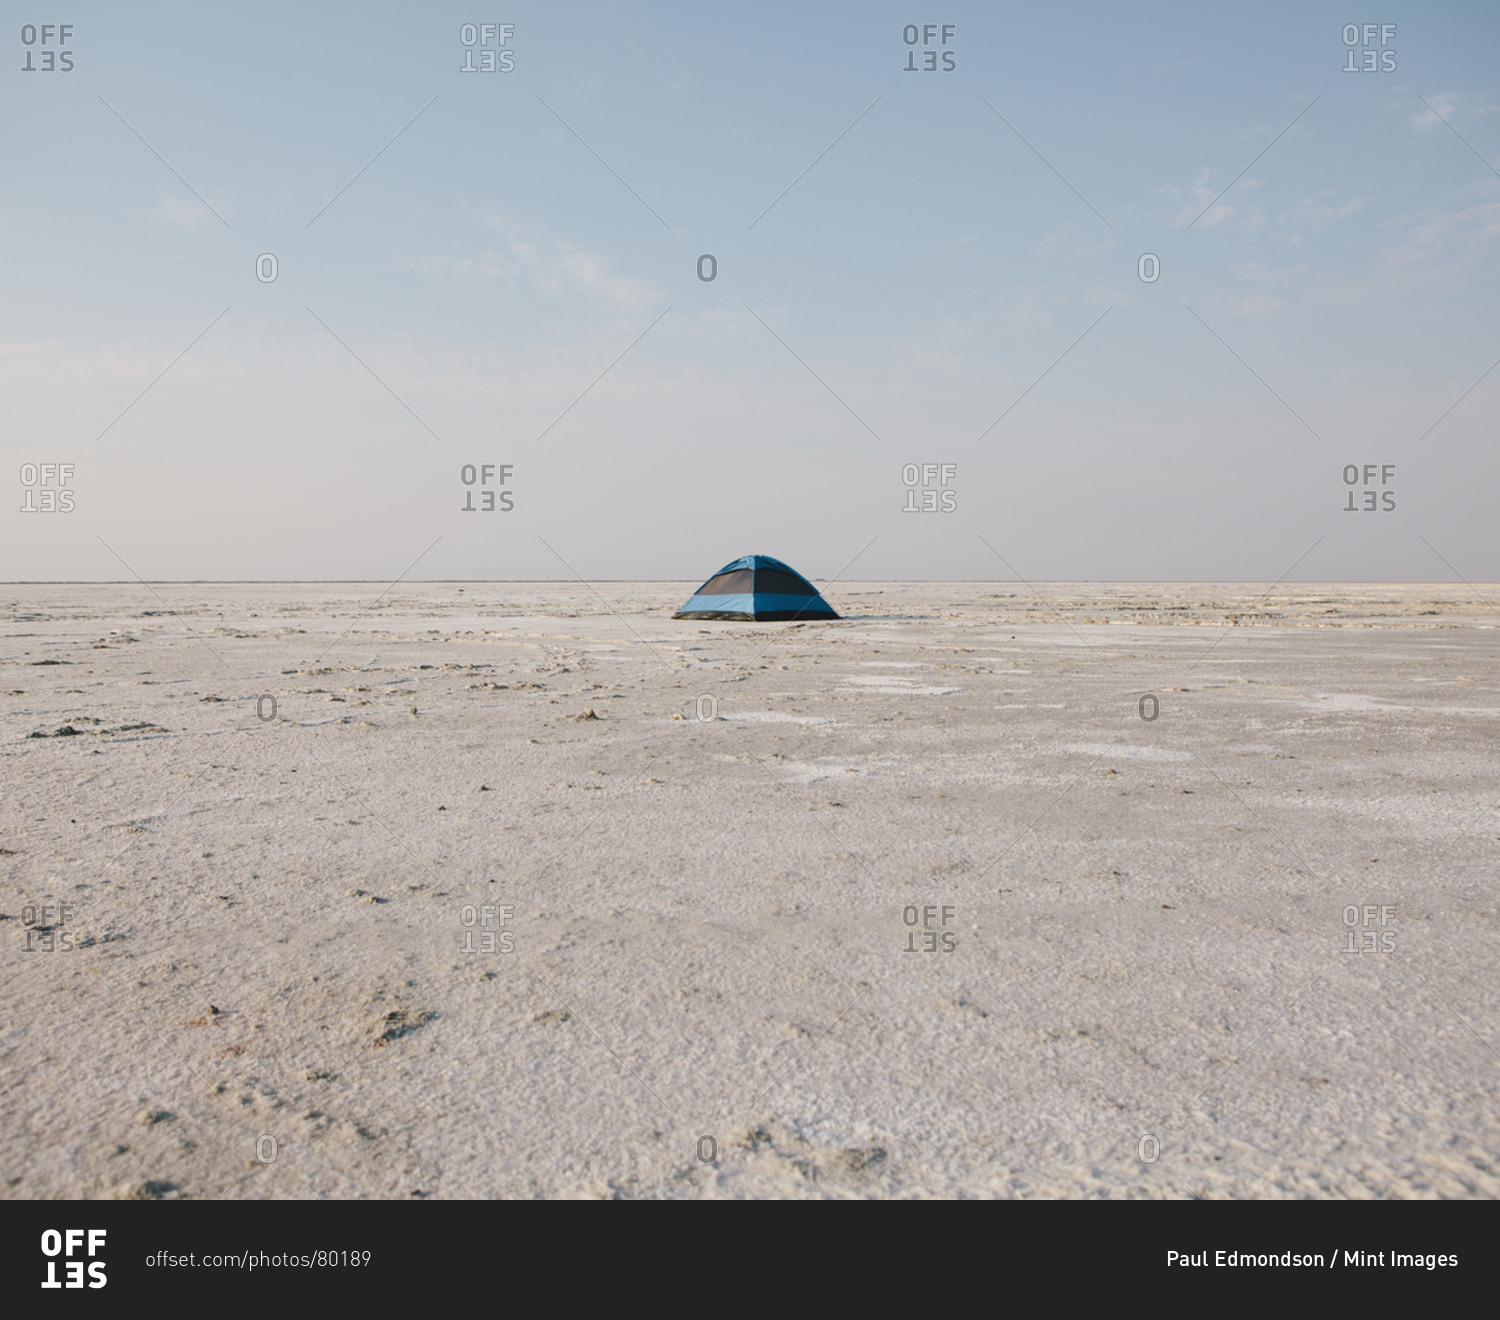 A blue tent on Bonneville Salt Flats at dusk.